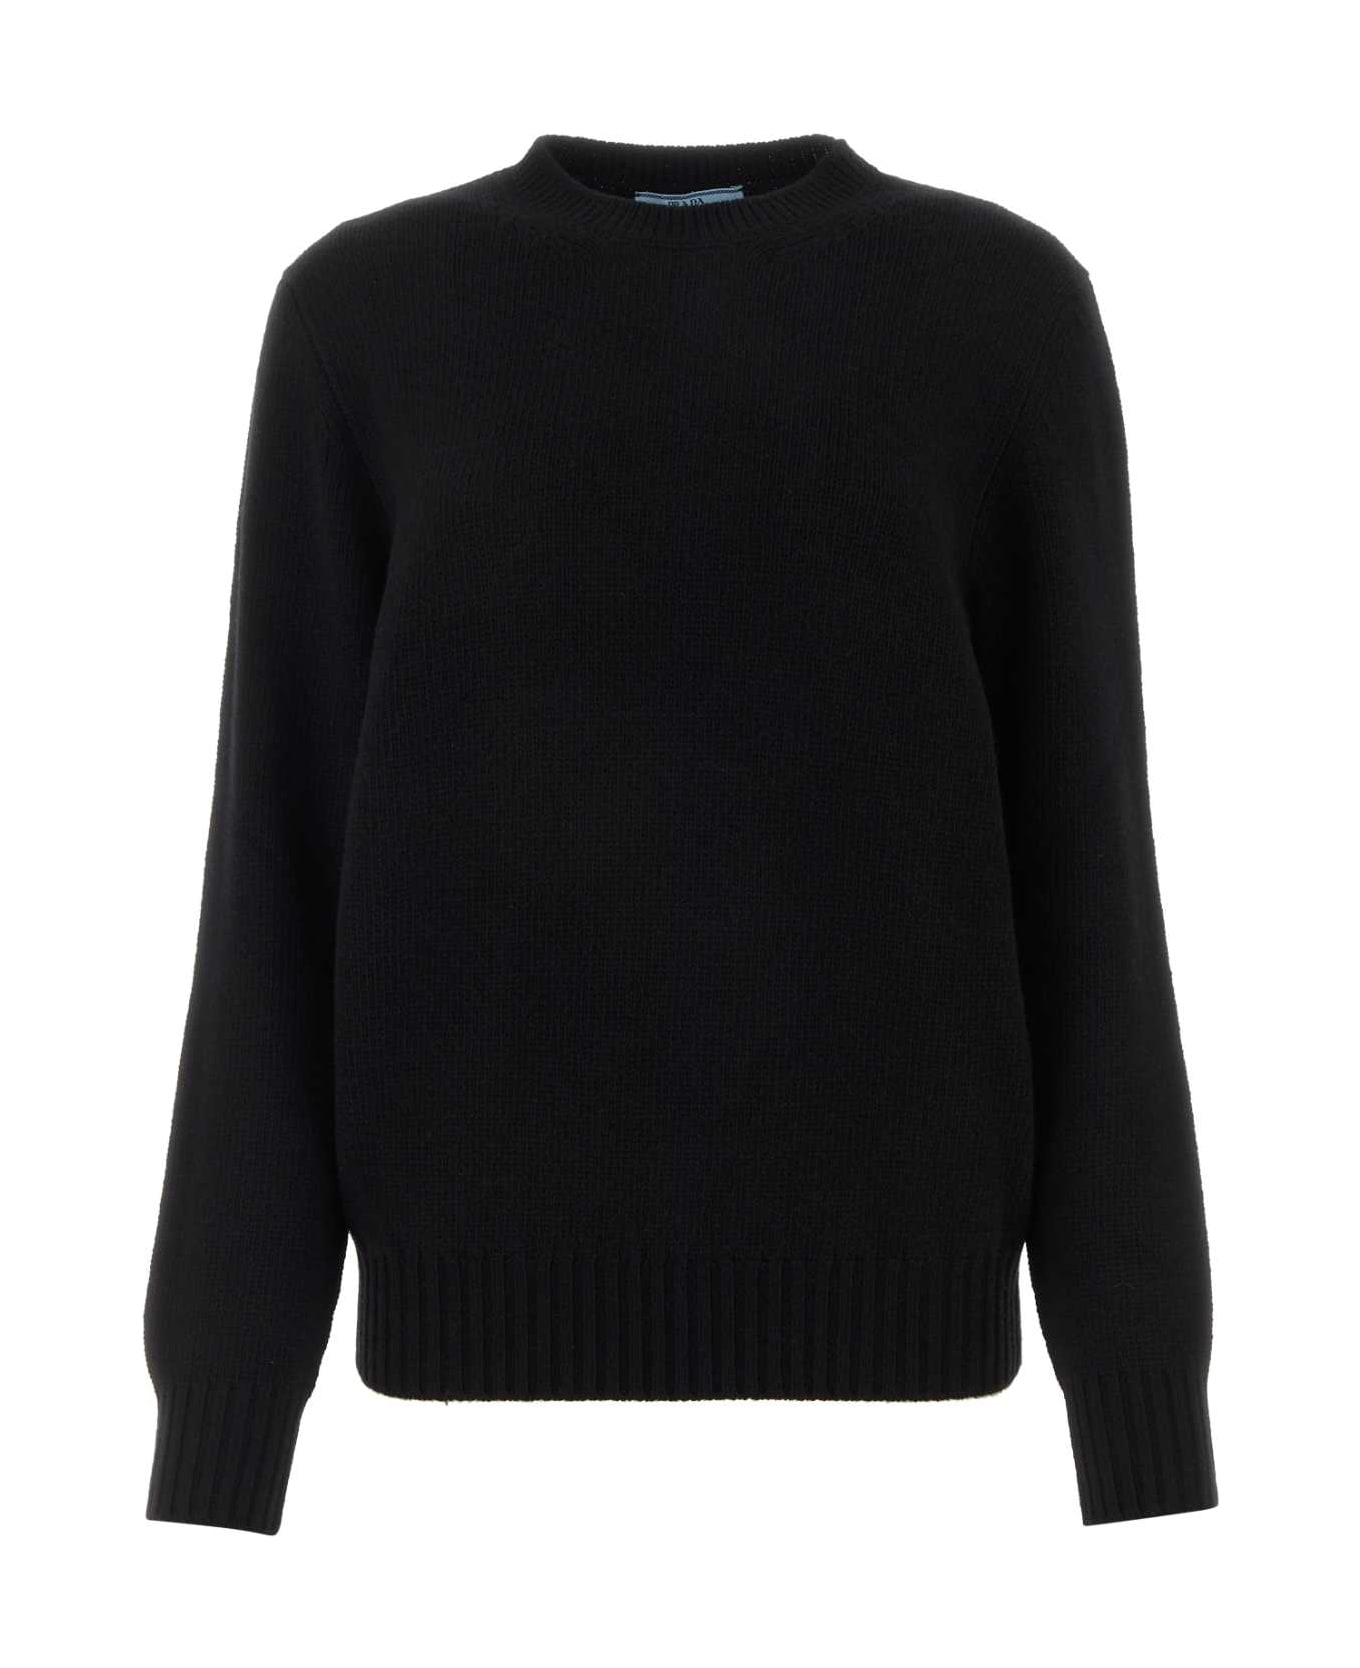 Prada Black Wool Blend Sweater - Black